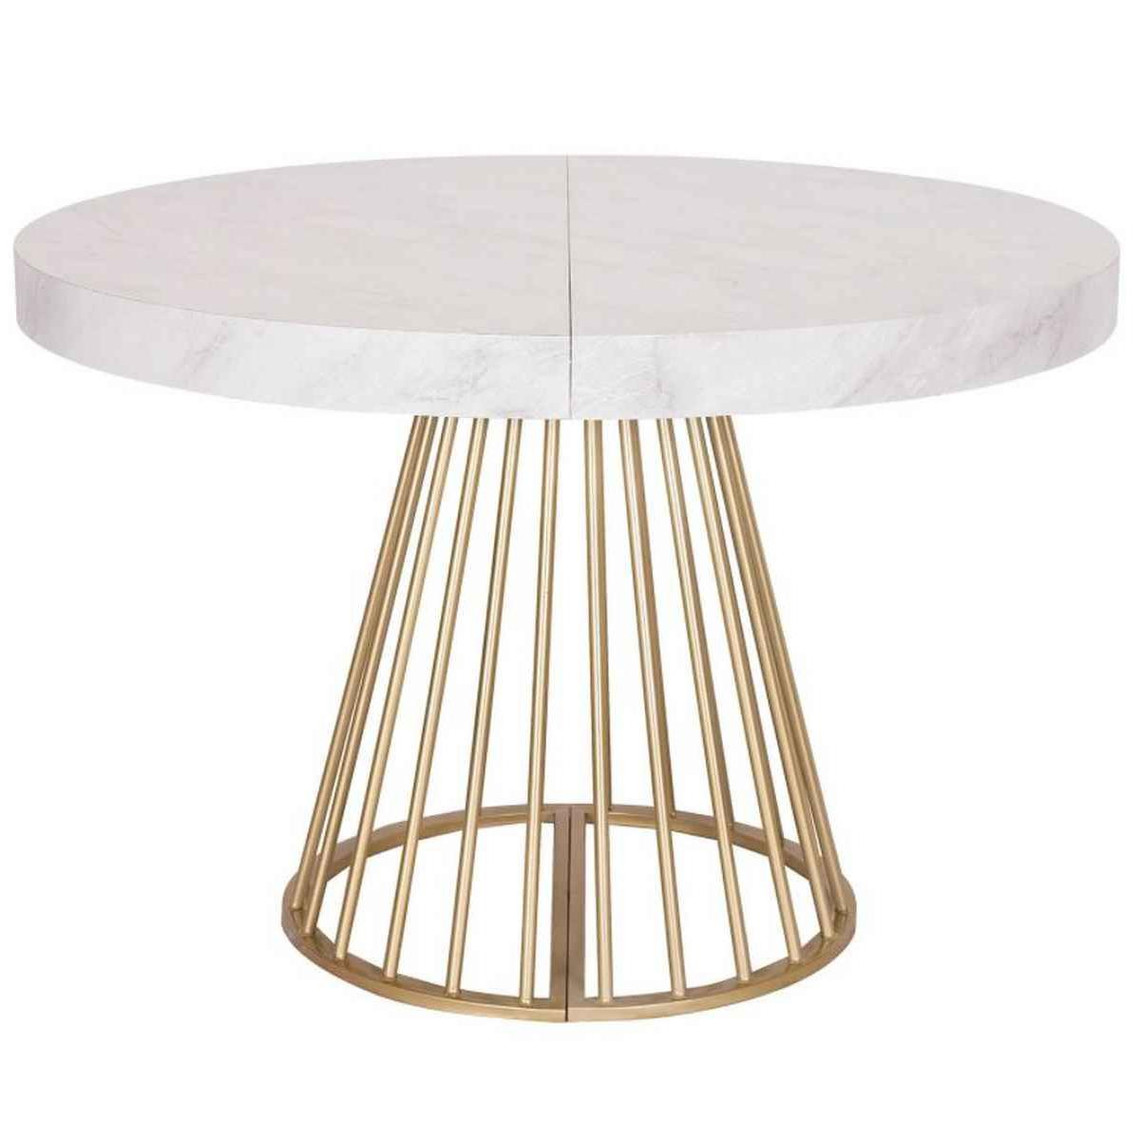 Table de repas extensible design aspect marbre blanc